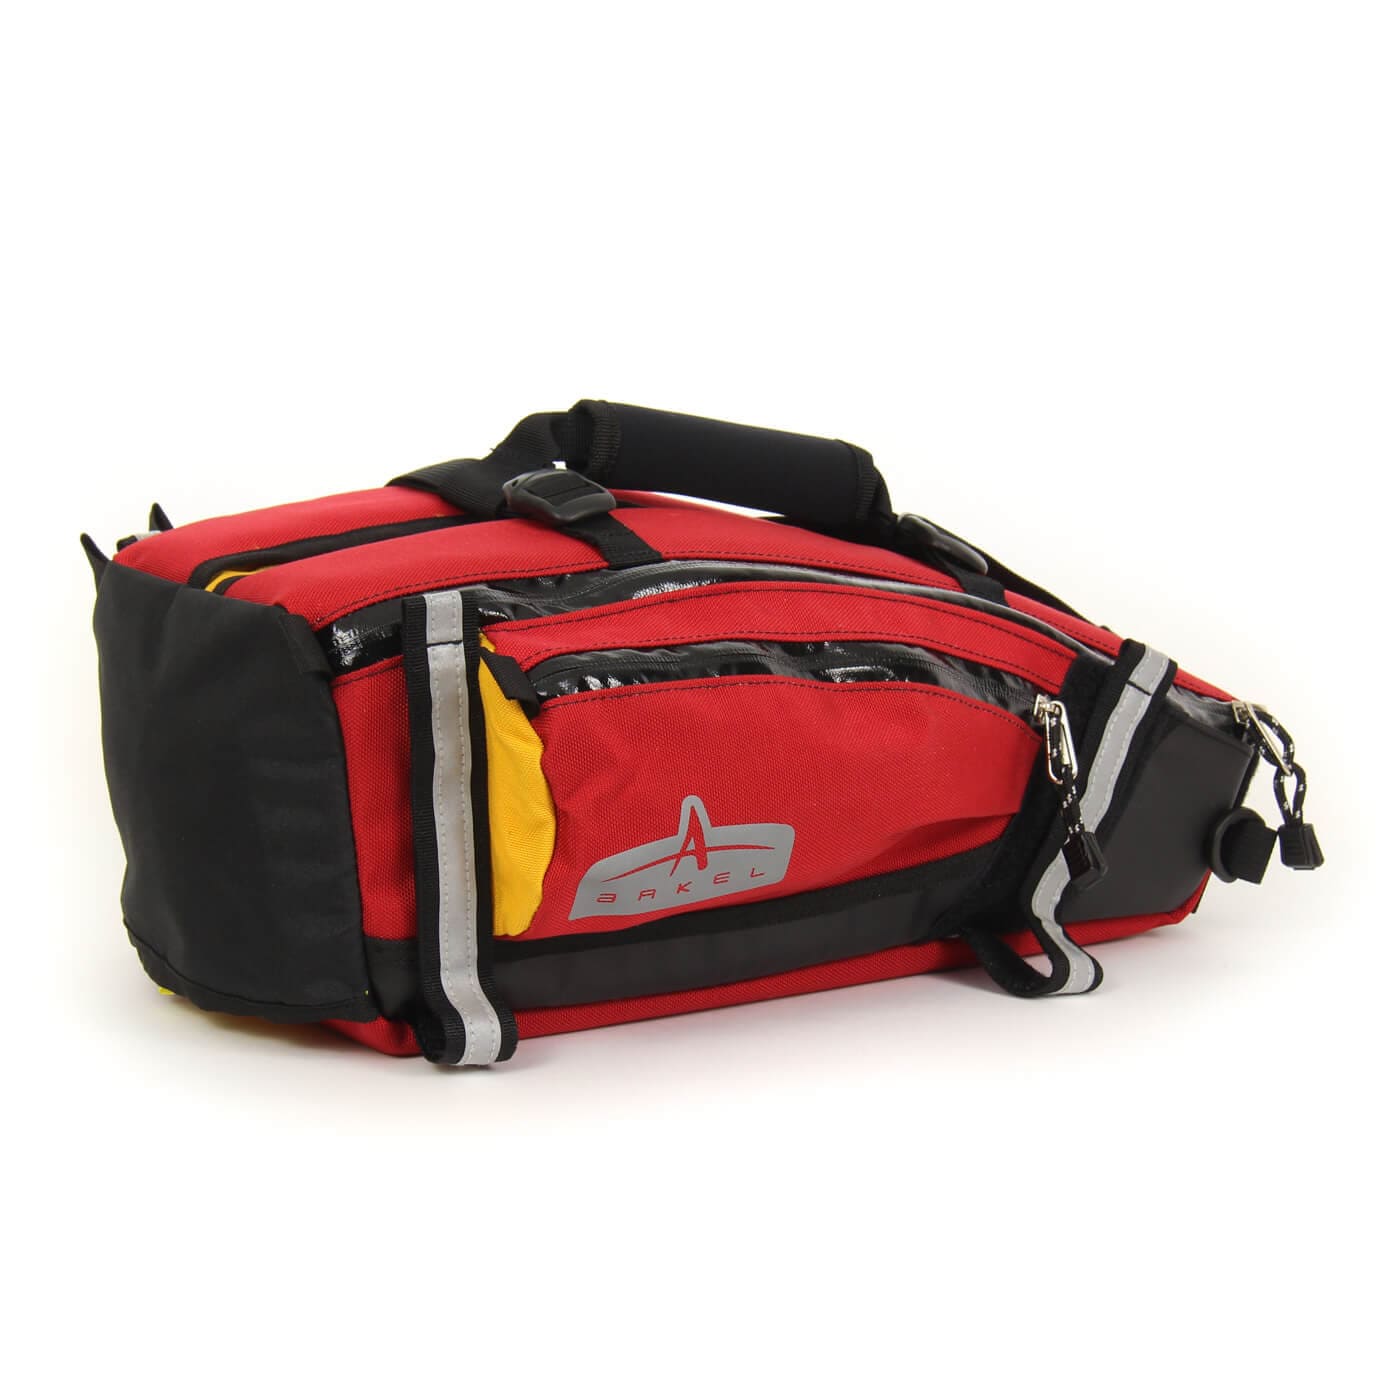 Arkel Bike Bags Cordura Red / 11 L TailRider - Trunk Bag